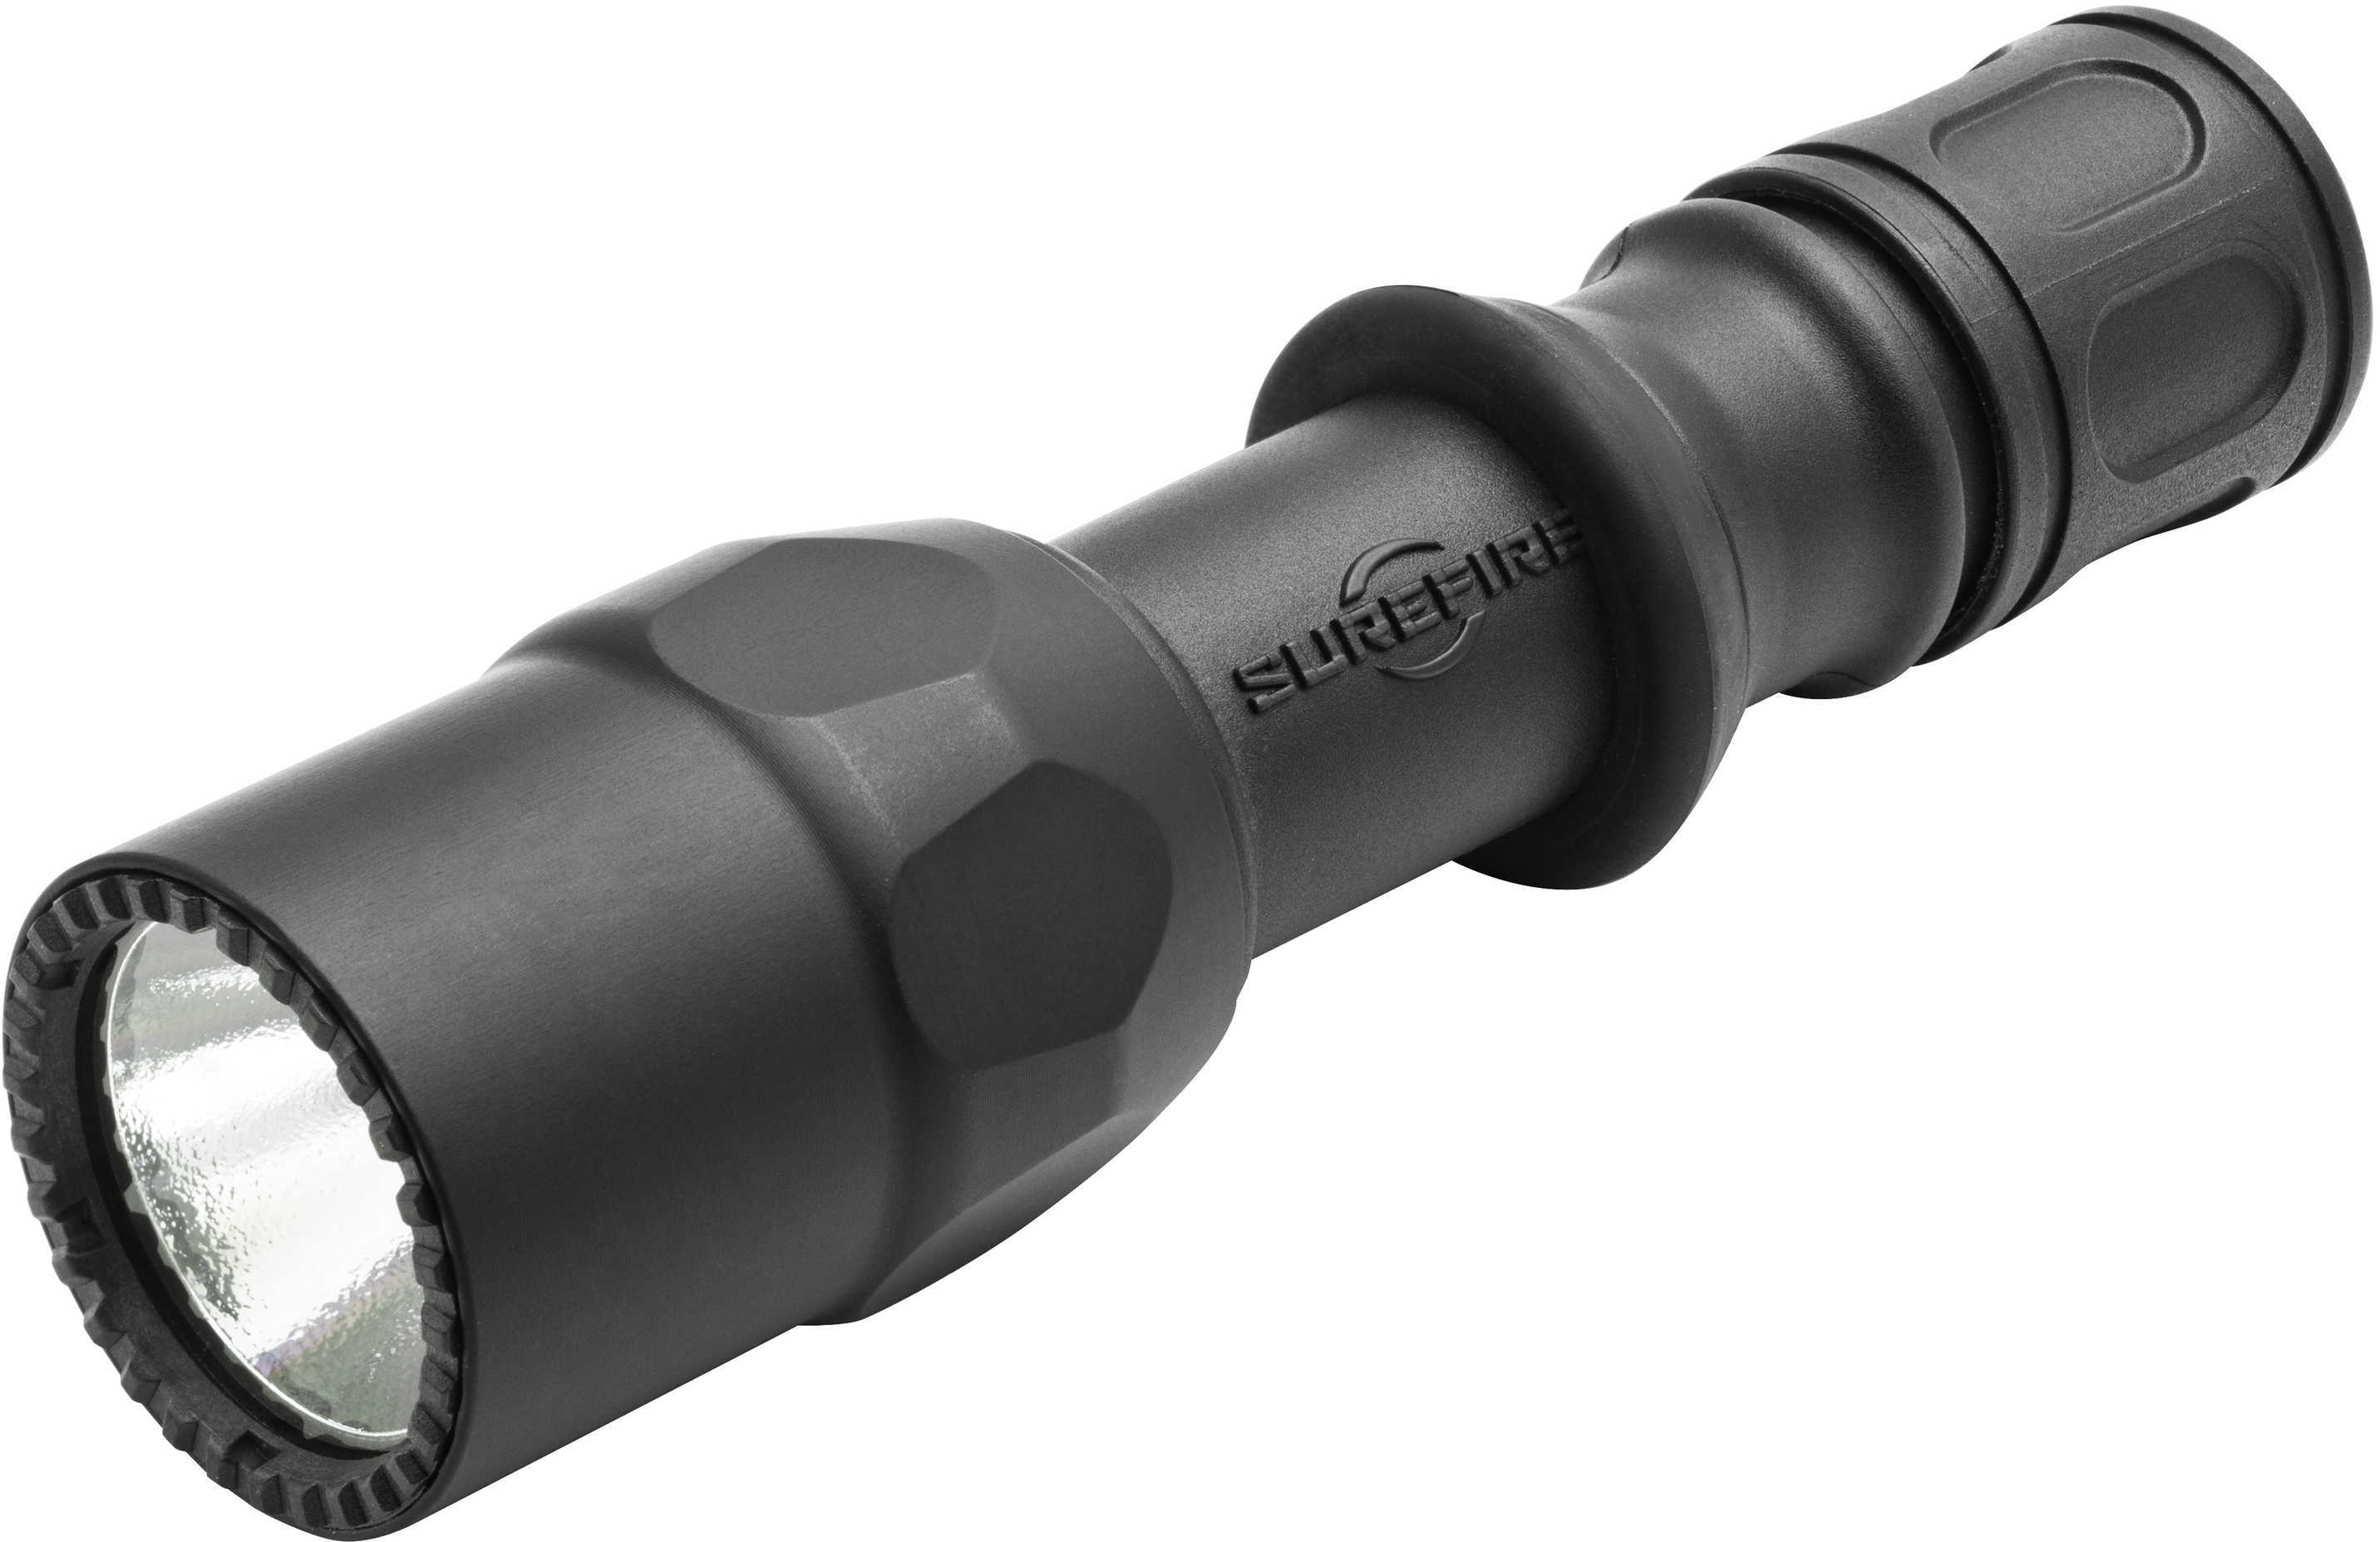 Surefire G2ZX Combatlight Flashlight Single-Output LED 600 Lumens Tactical Momentary-On Tailcap Switch Black G2ZX-C-BK